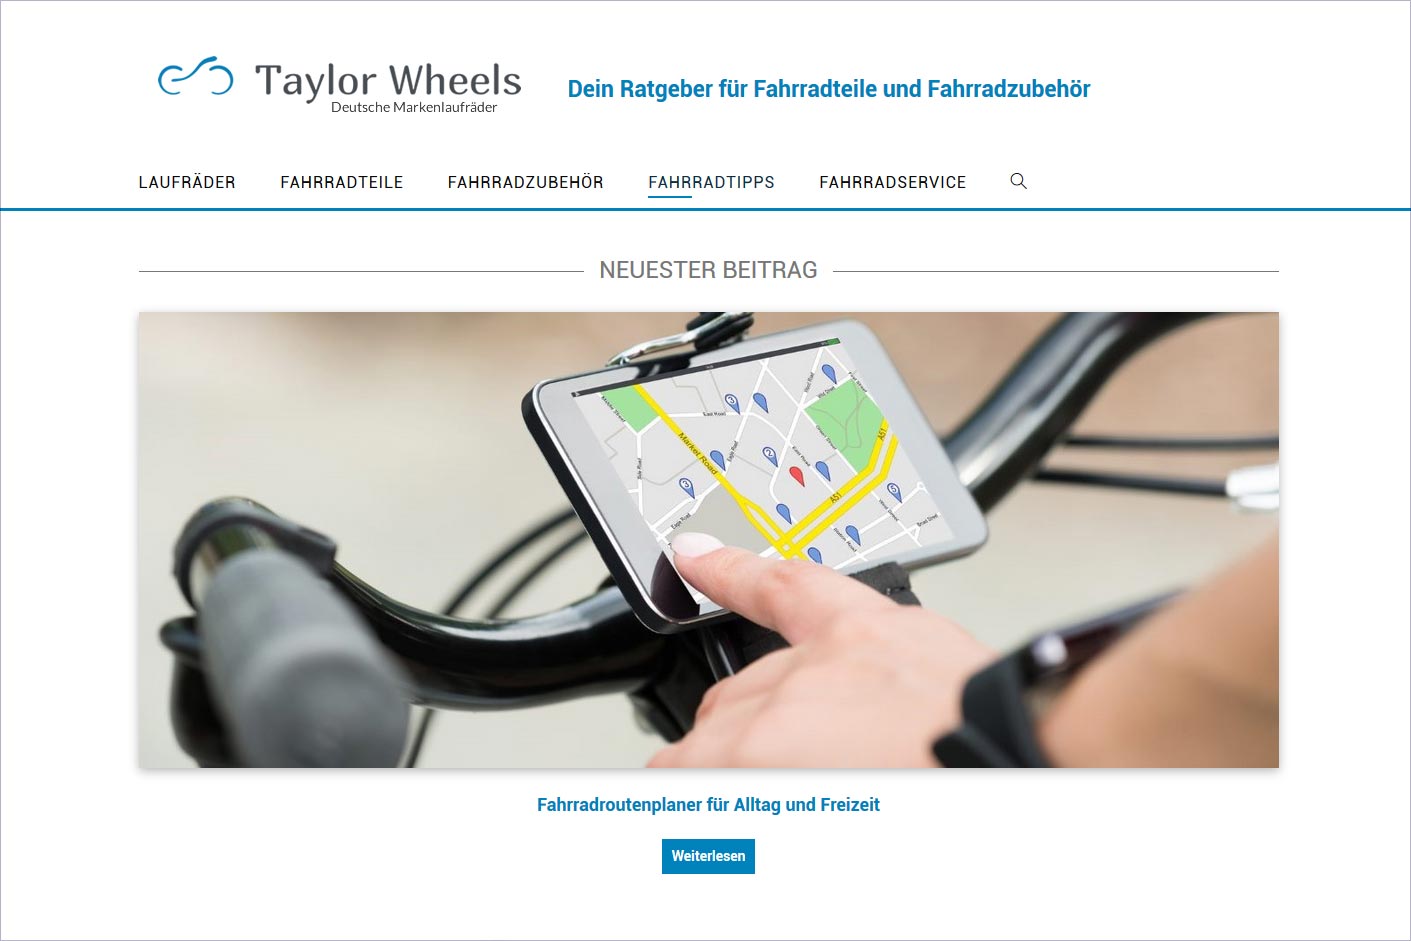 semcona - Case Study Taylor Wheels: magazine